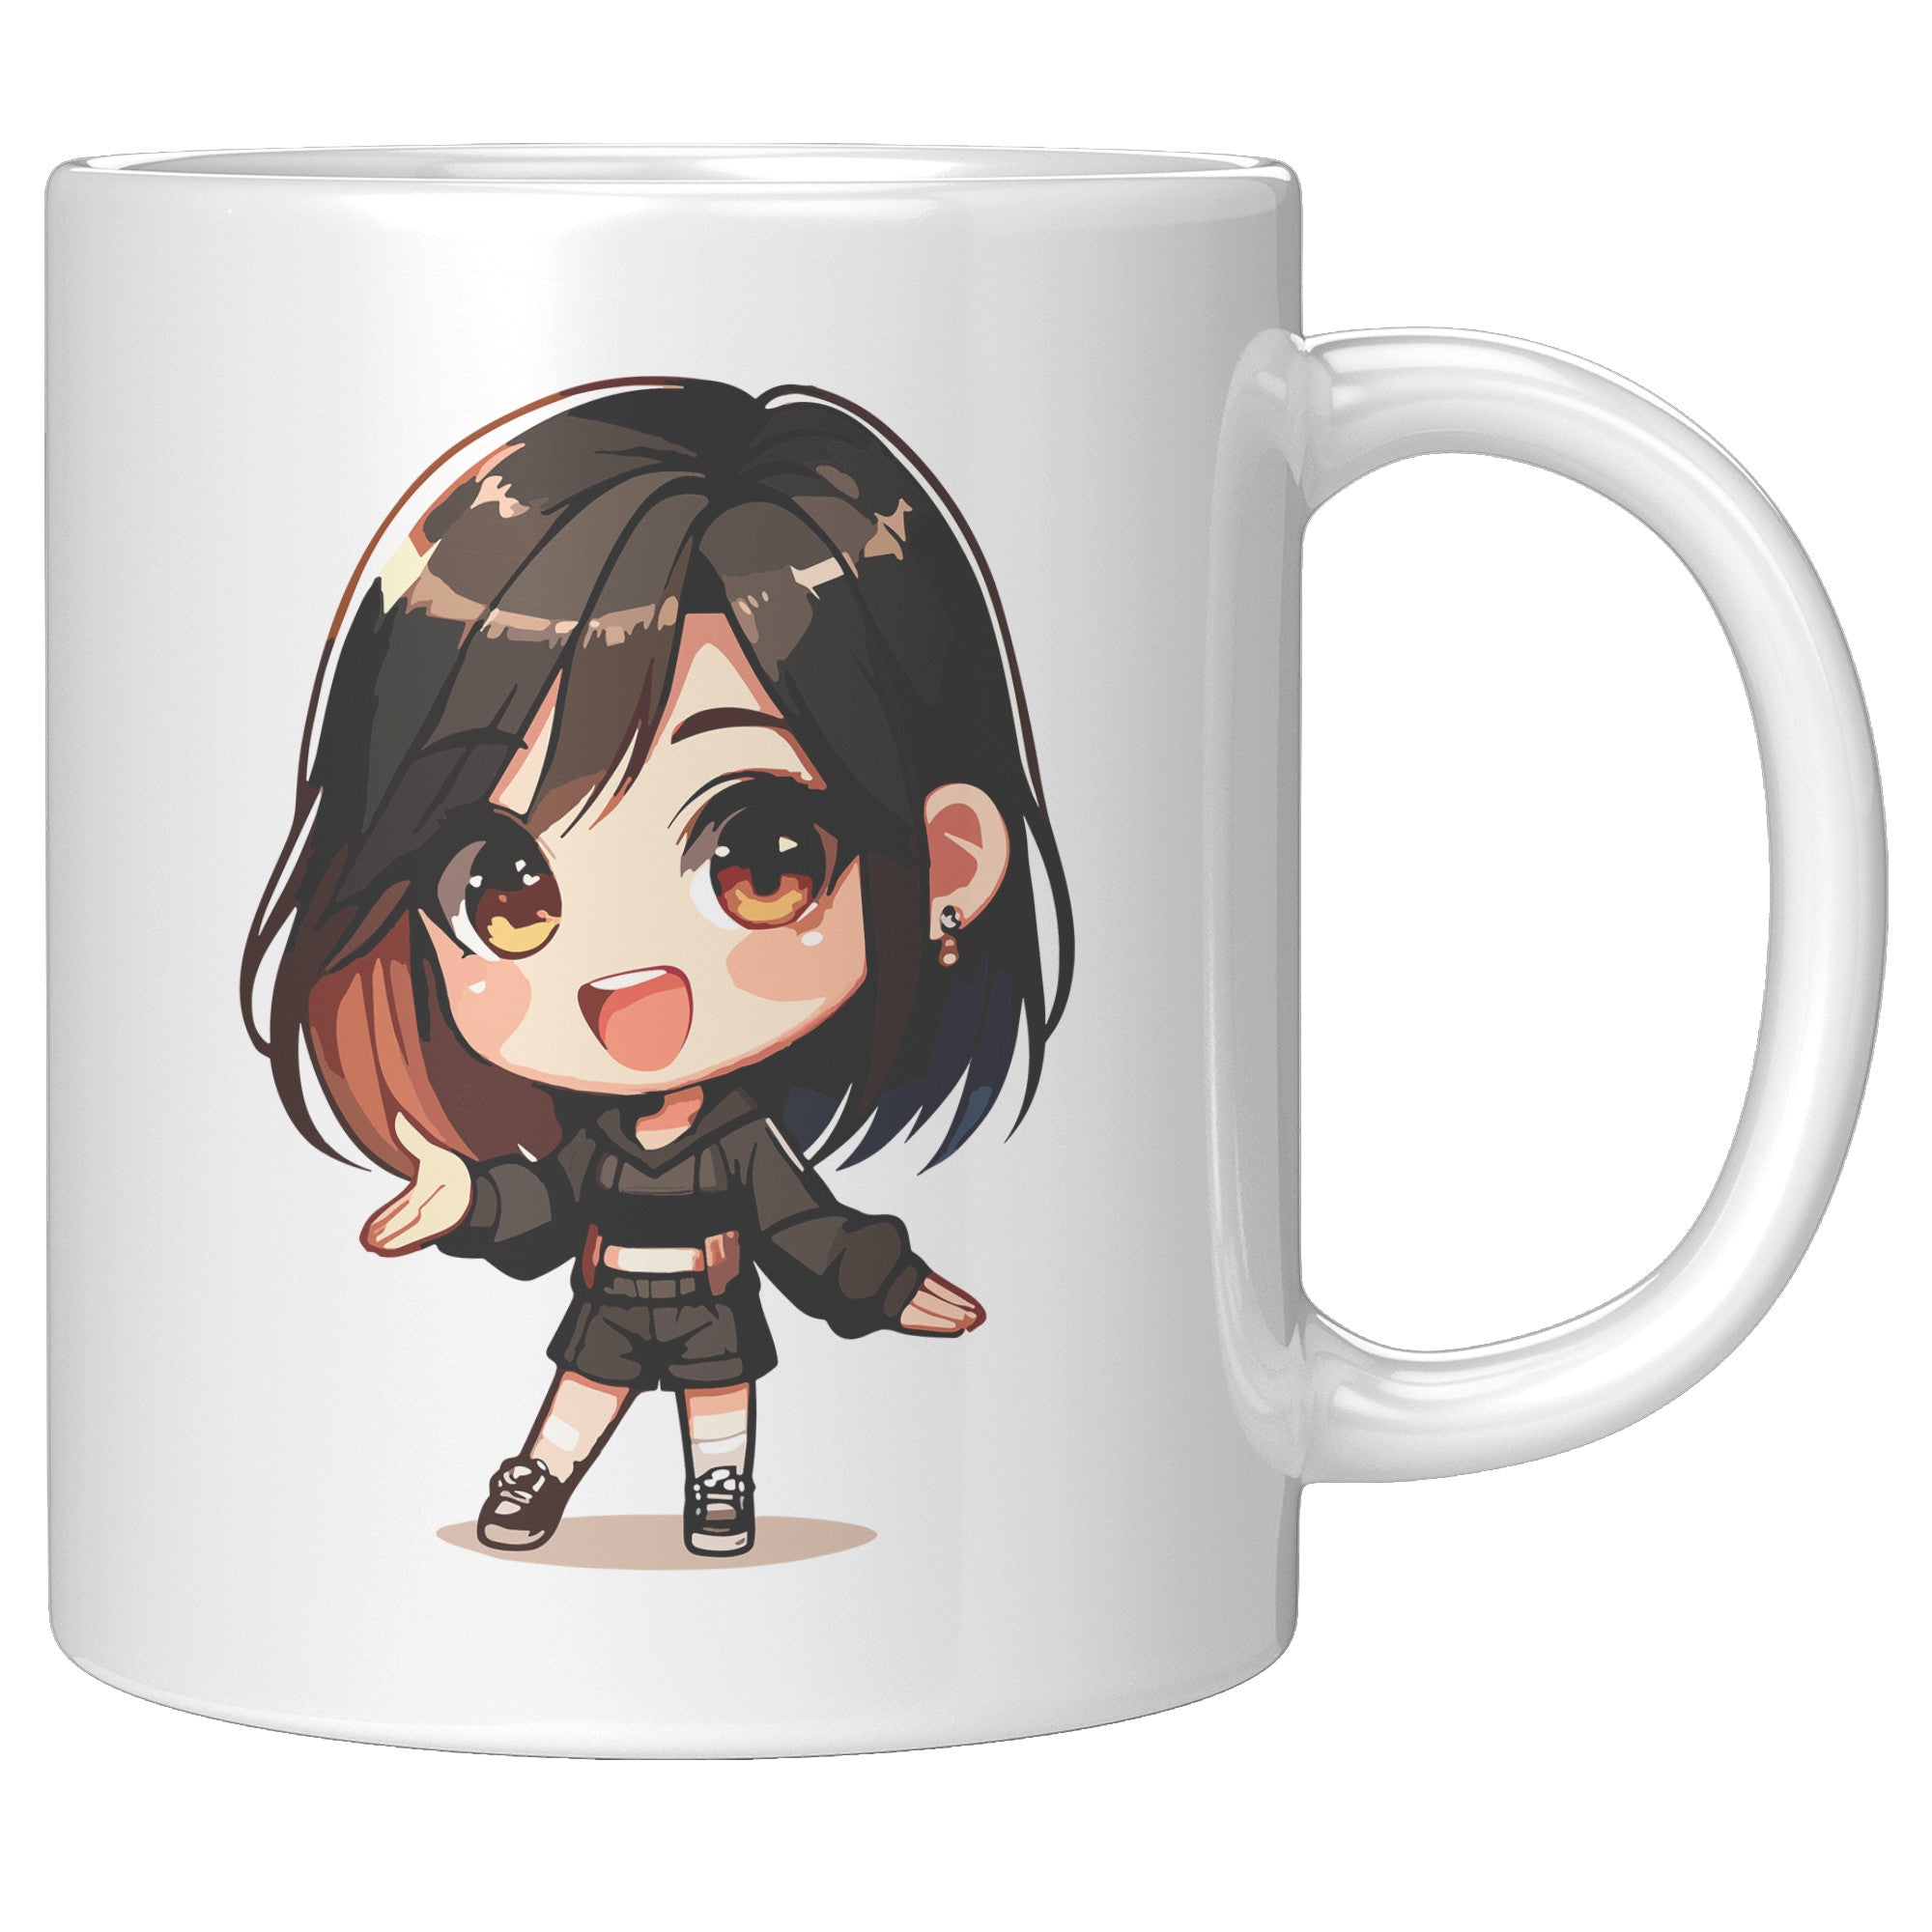 "Marites Gossip Queen Coffee Mug - Cute Cartoon 'Ano Ang Latest?' Cup - Perfect Chismosa Gift - Filipino Slang Tea Mug" - JJ